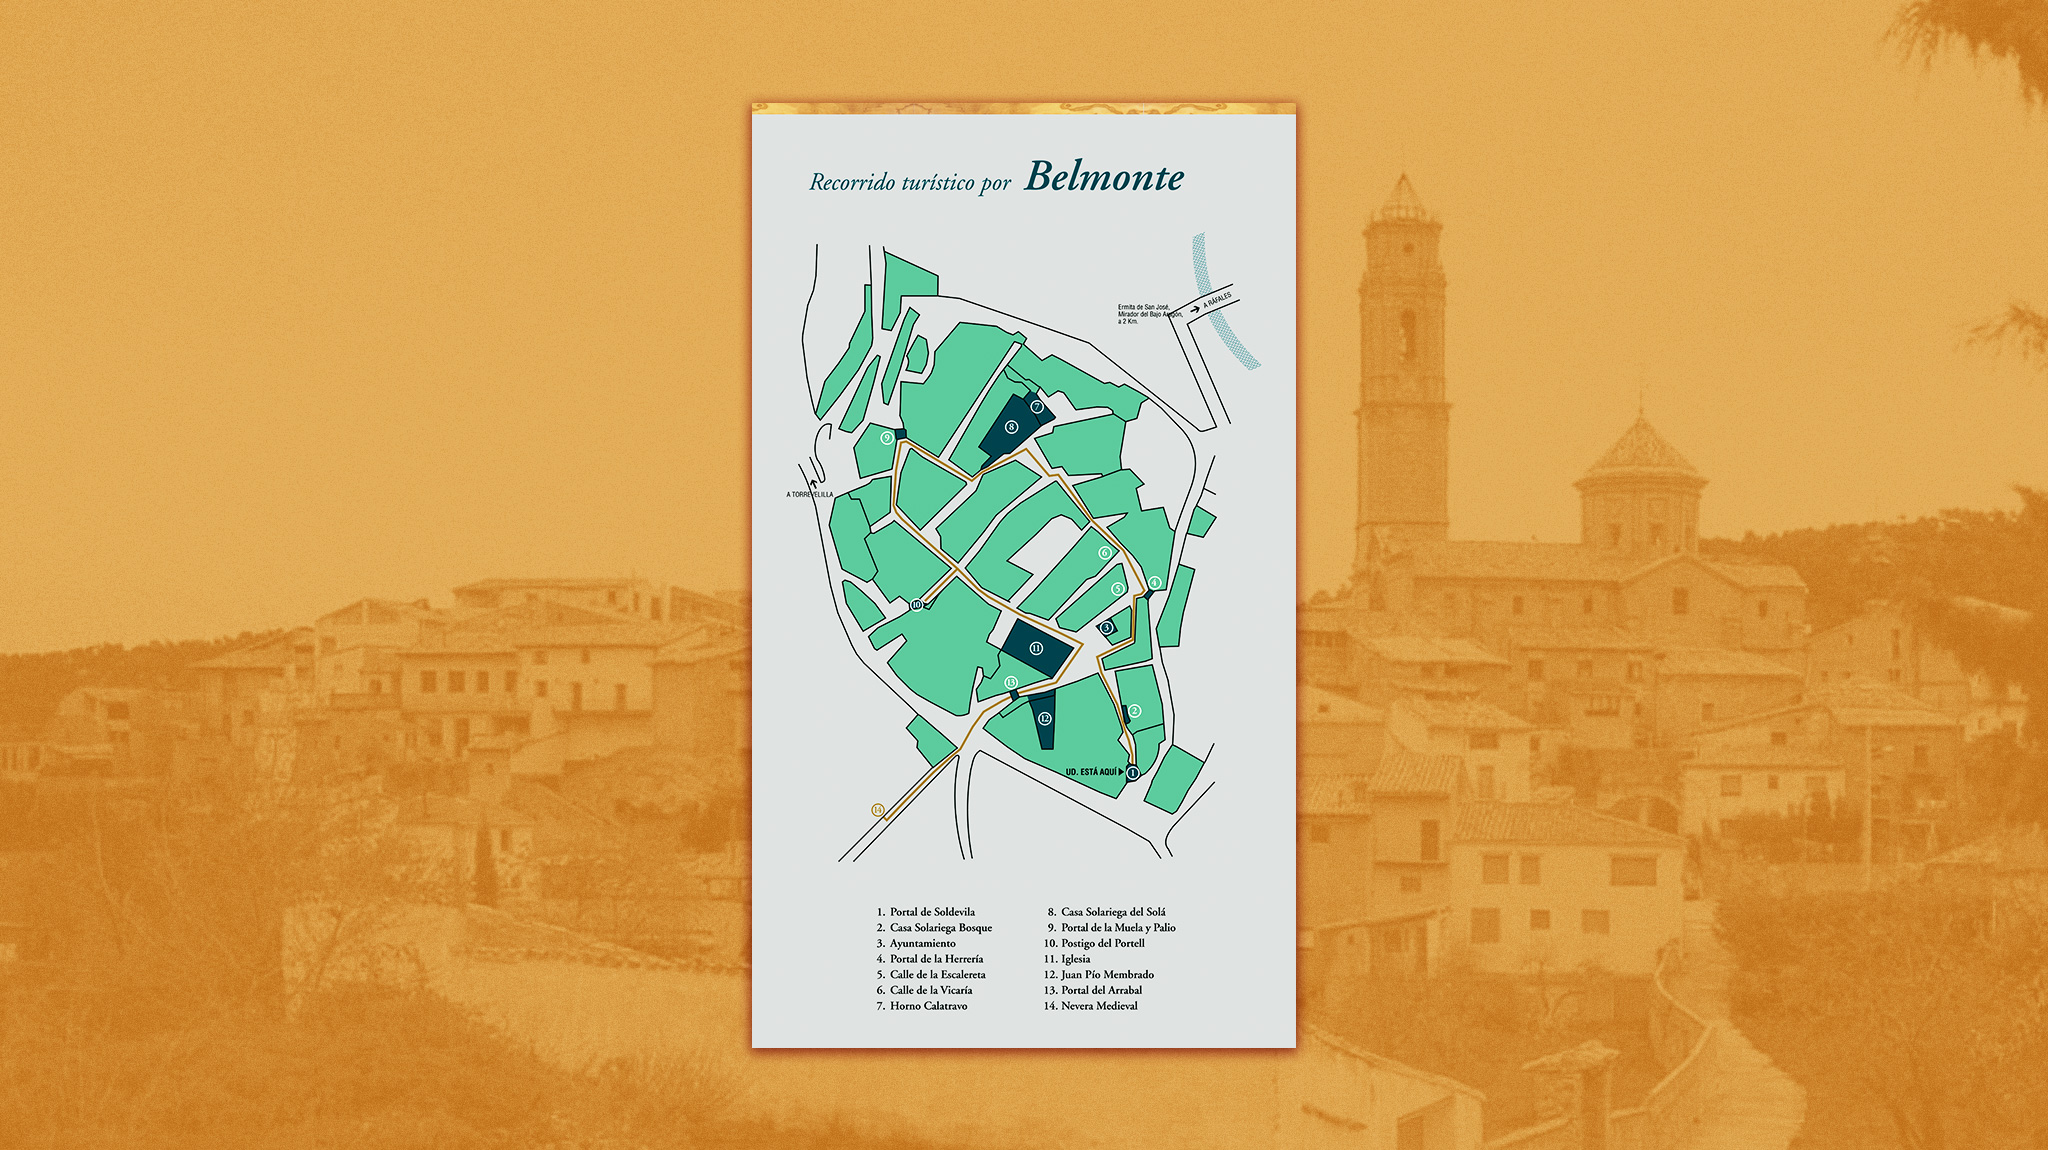 Diseño mapa recorrido turístico por Belmonte